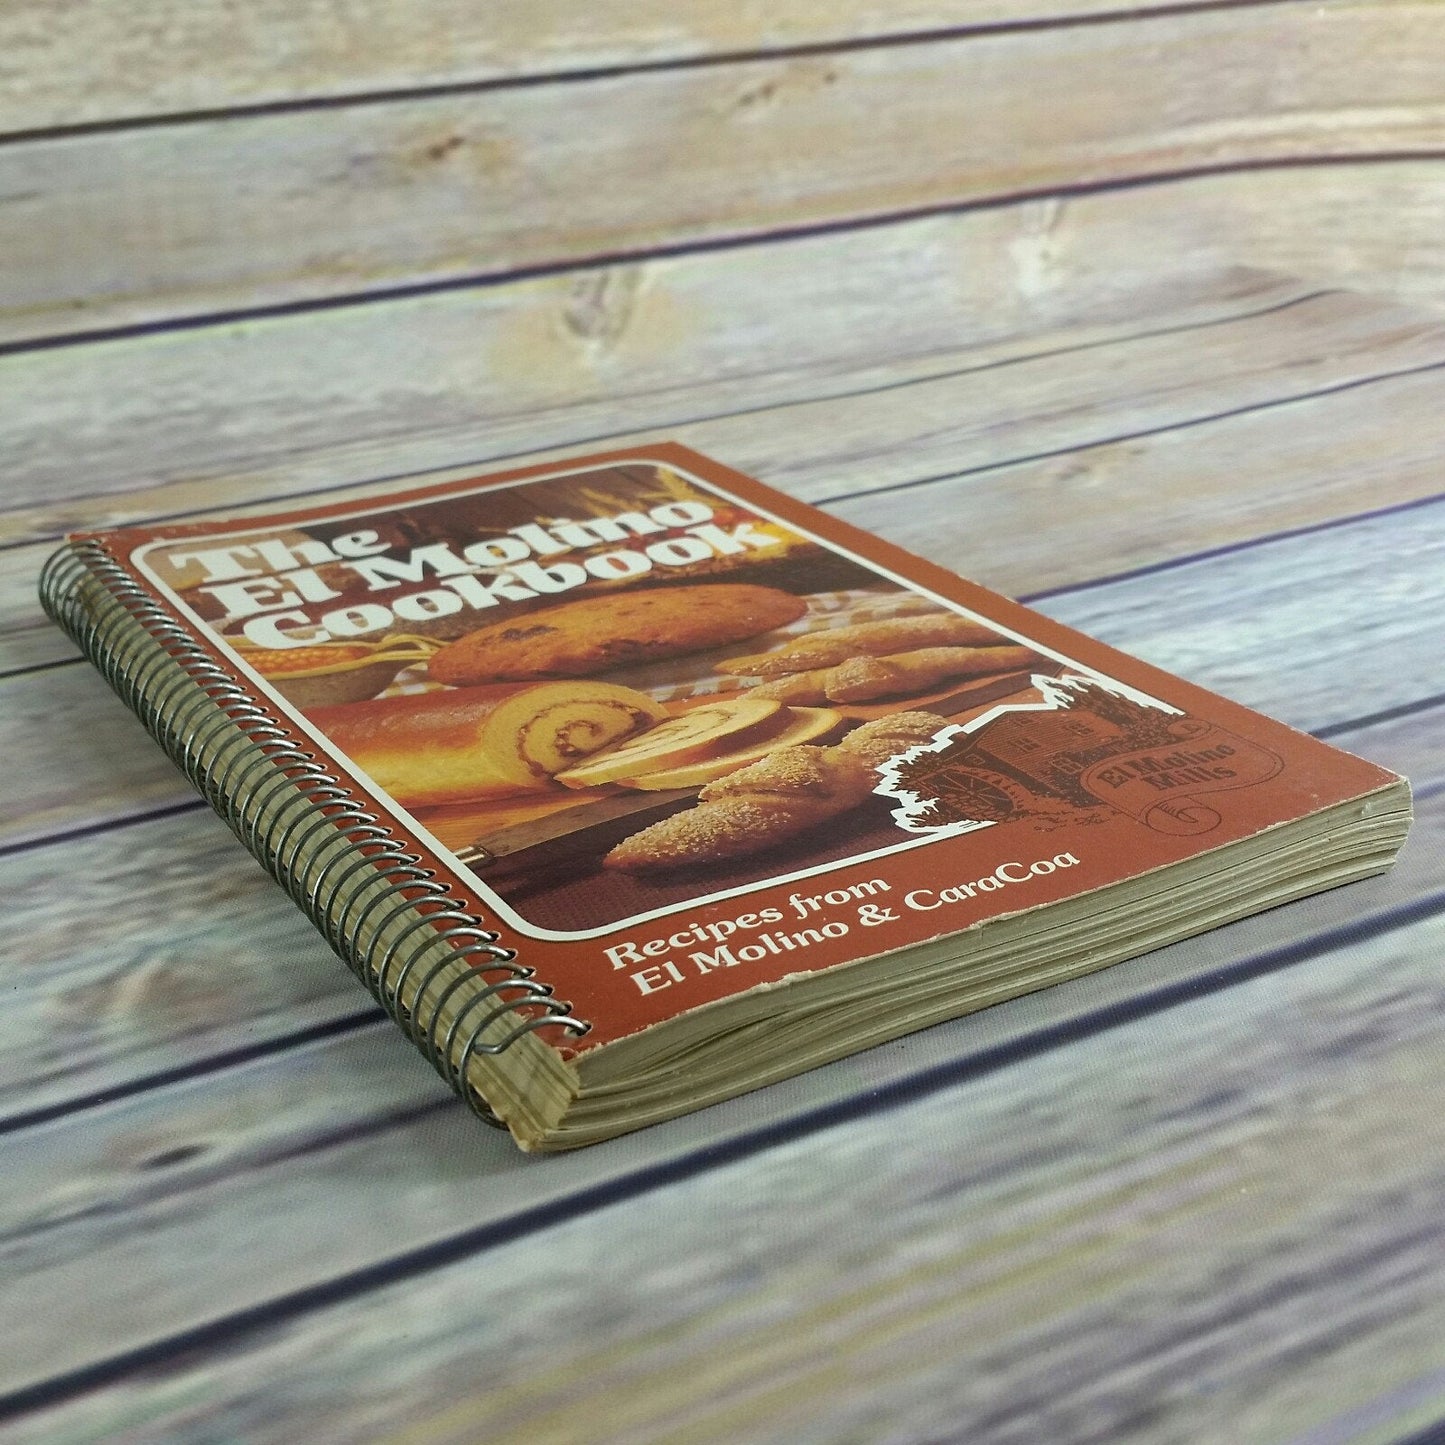 Vintage California Cookbook - The El Molino Mills Cookbook - 1976 CaraCoa Grains Seeds Legumes Carob Wholegrains Cooking Spiral Bound